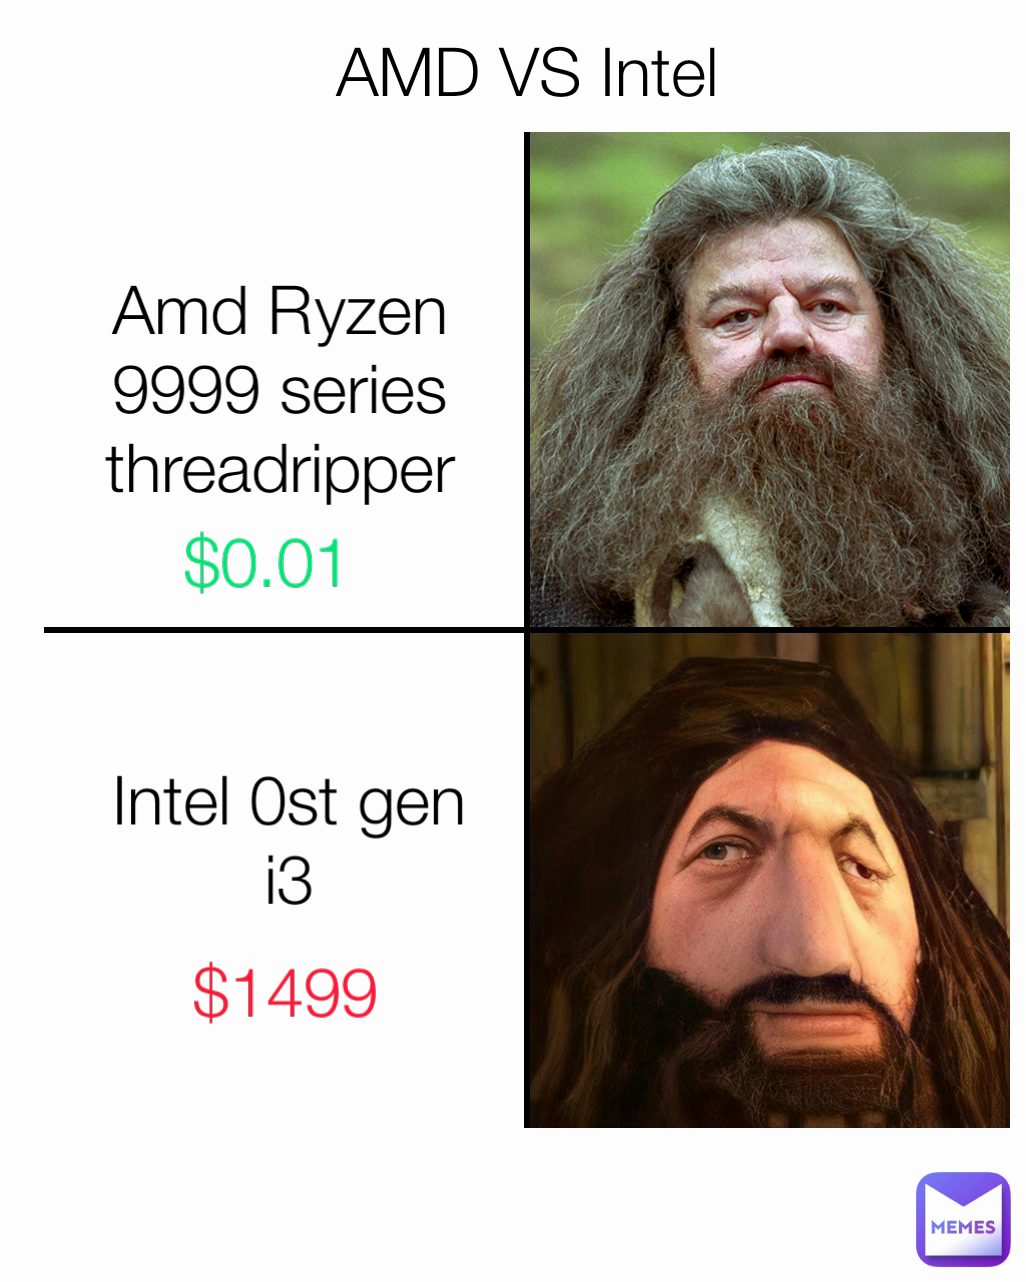 Amd Ryzen 9999 series threadripper $0.01 Intel 0st gen i3 $1499 AMD VS Intel